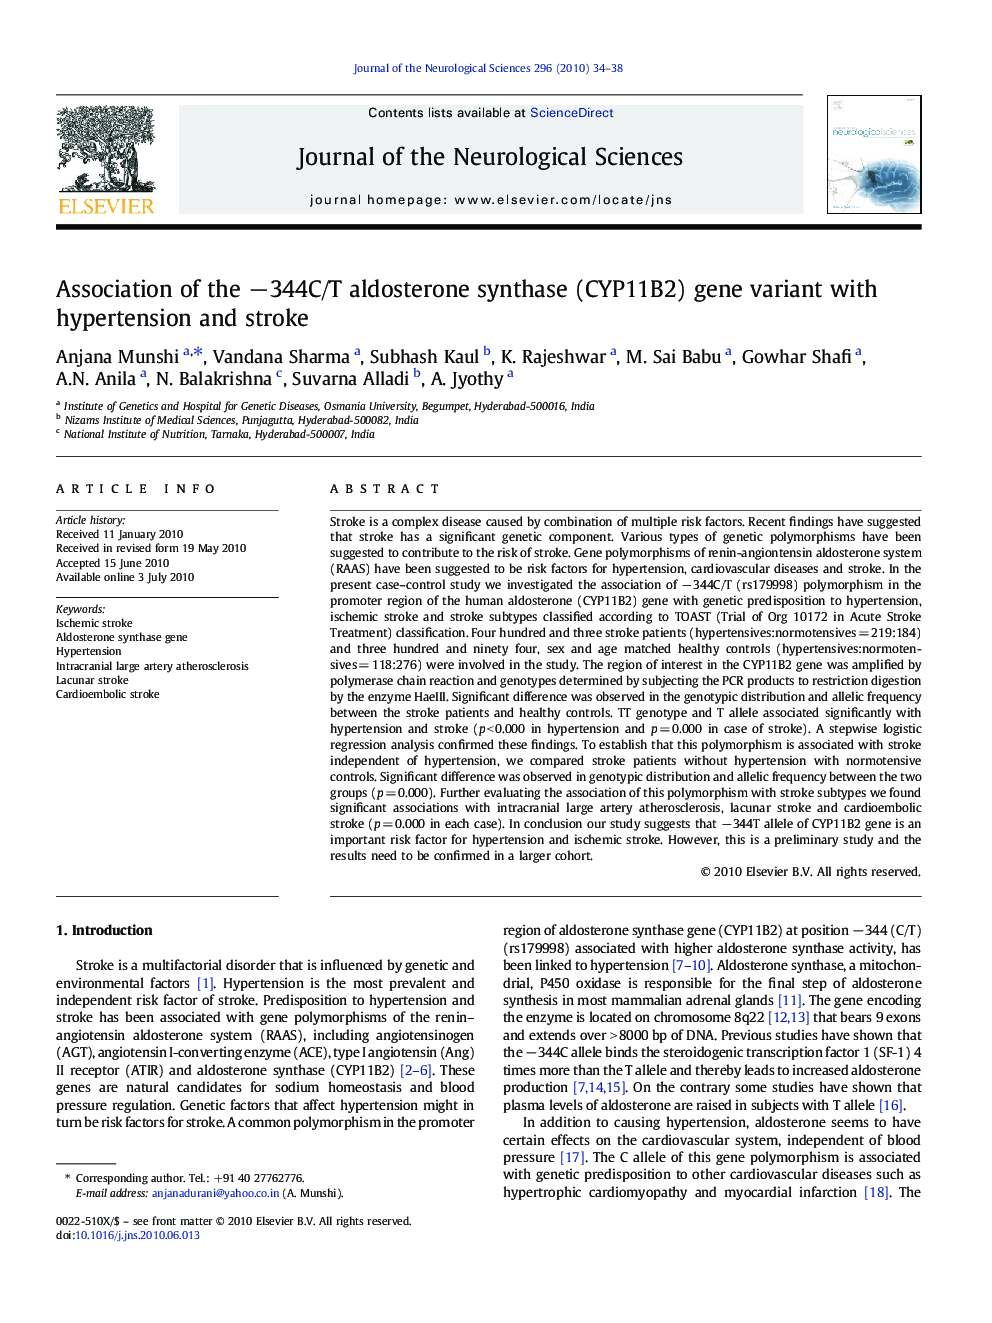 Association of the â344C/T aldosterone synthase (CYP11B2) gene variant with hypertension and stroke